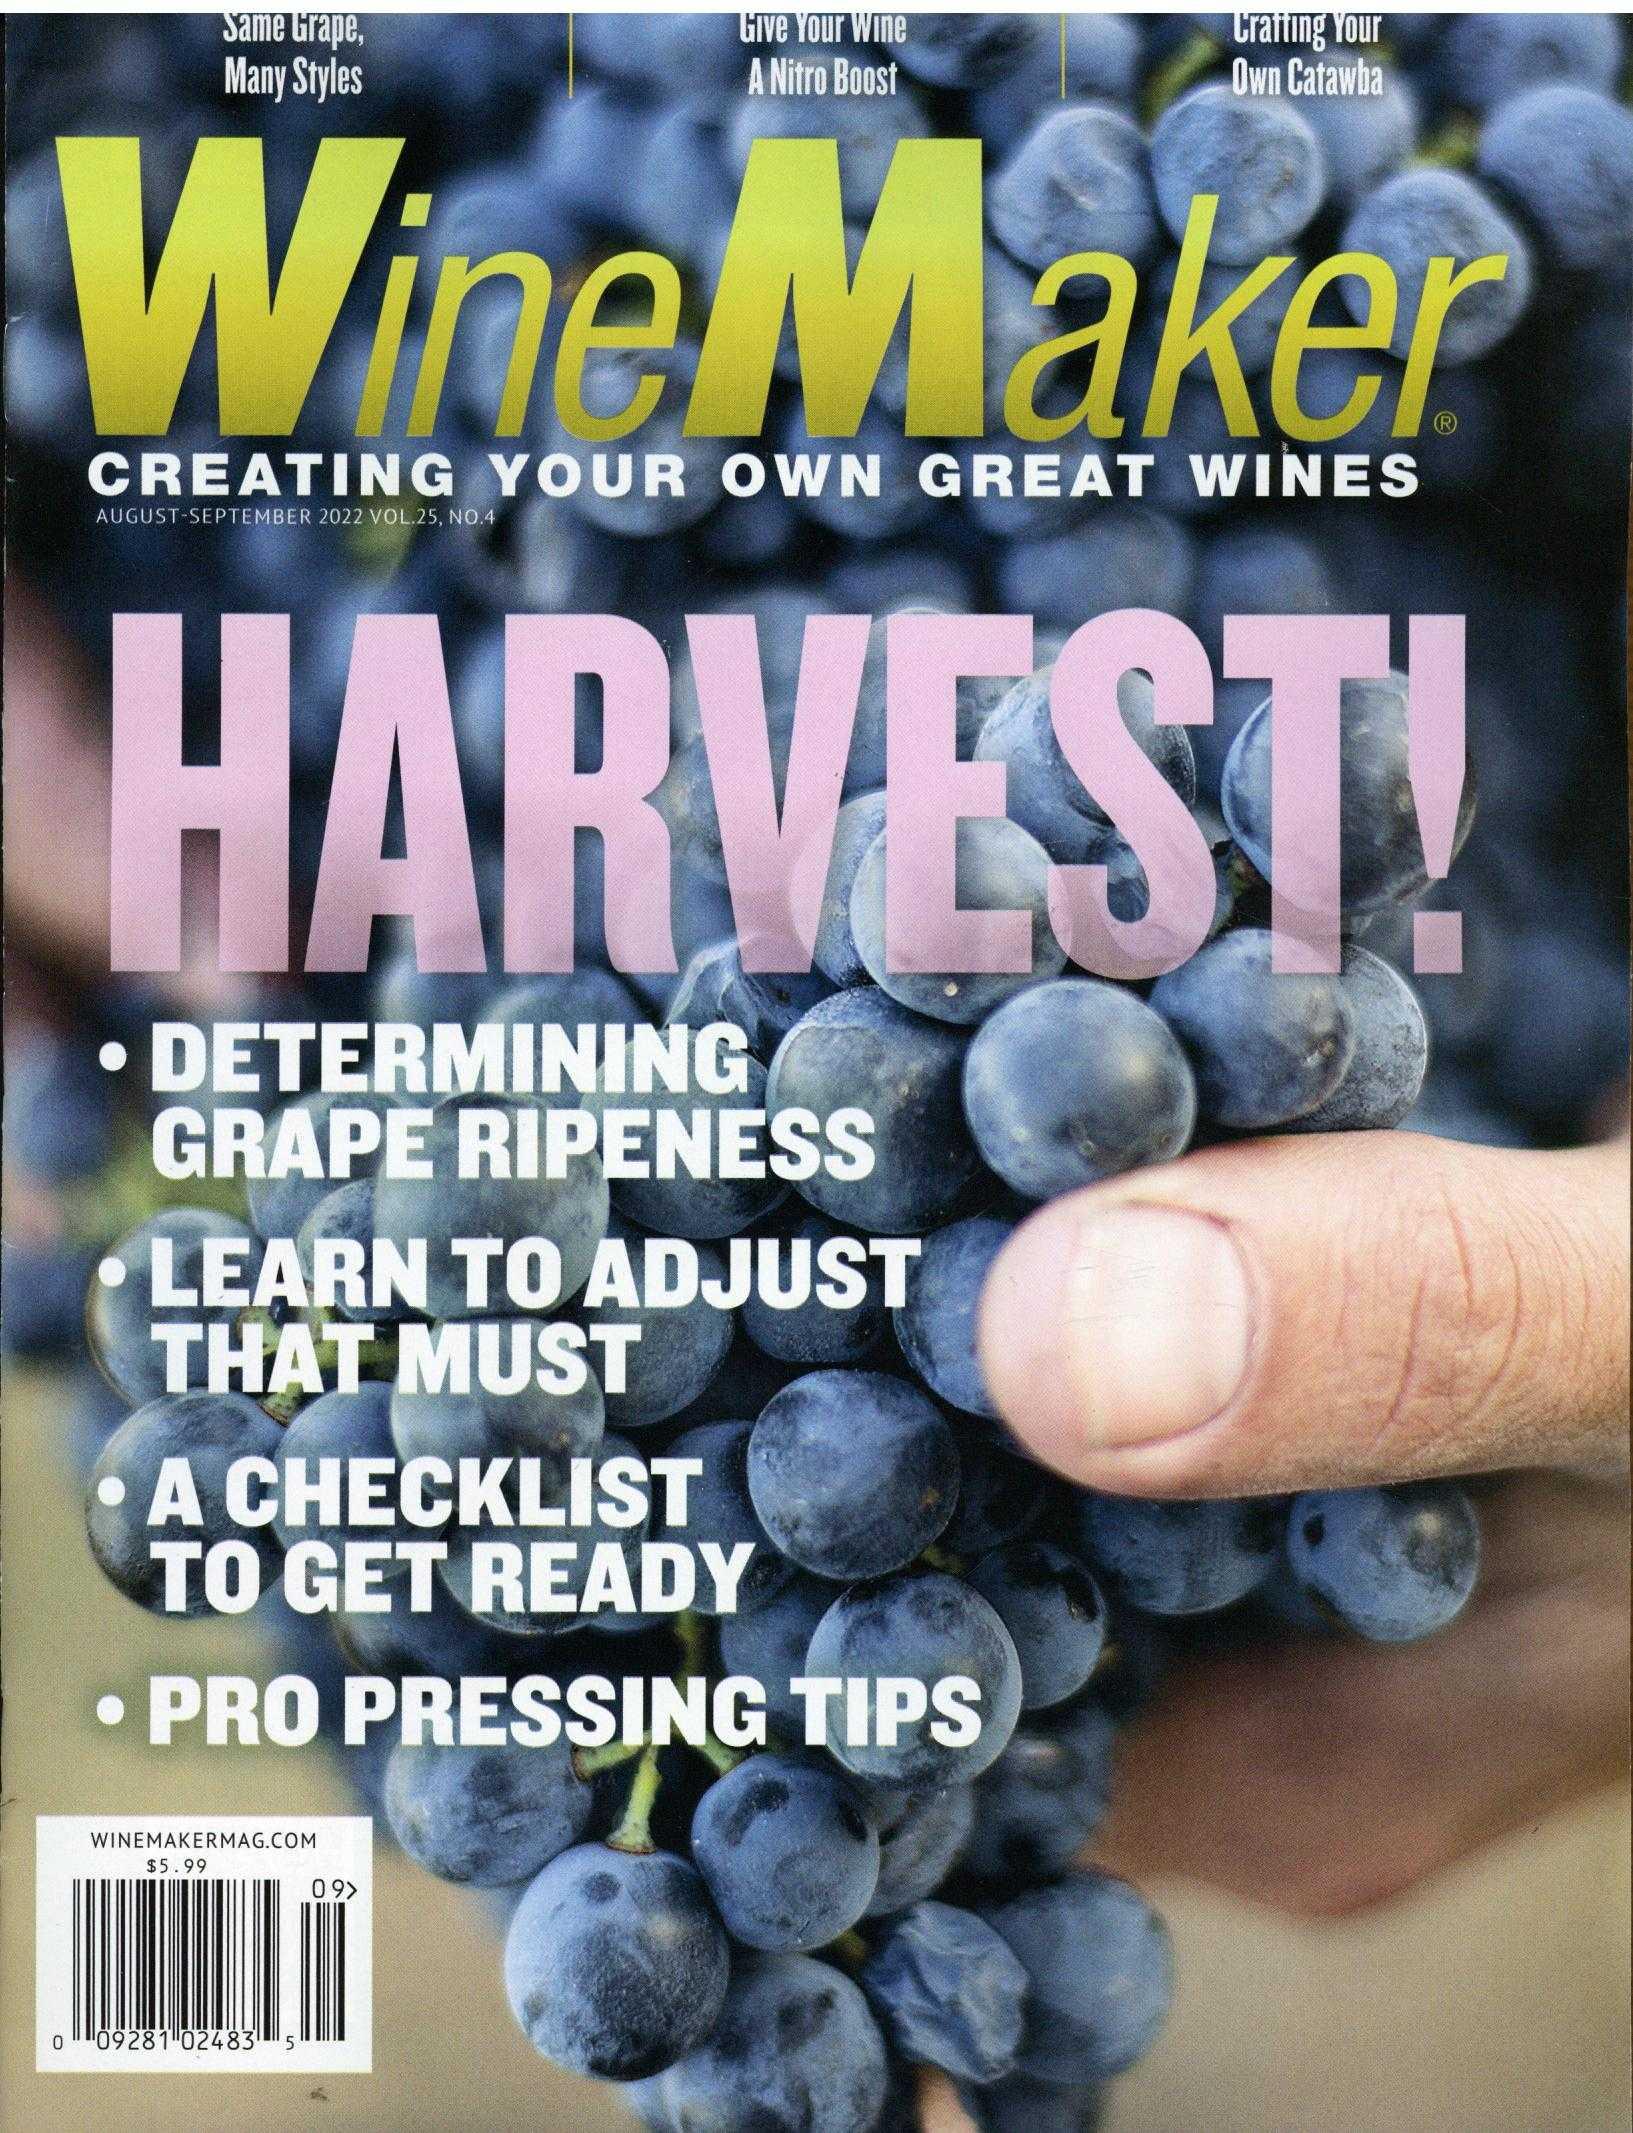 Wine maker